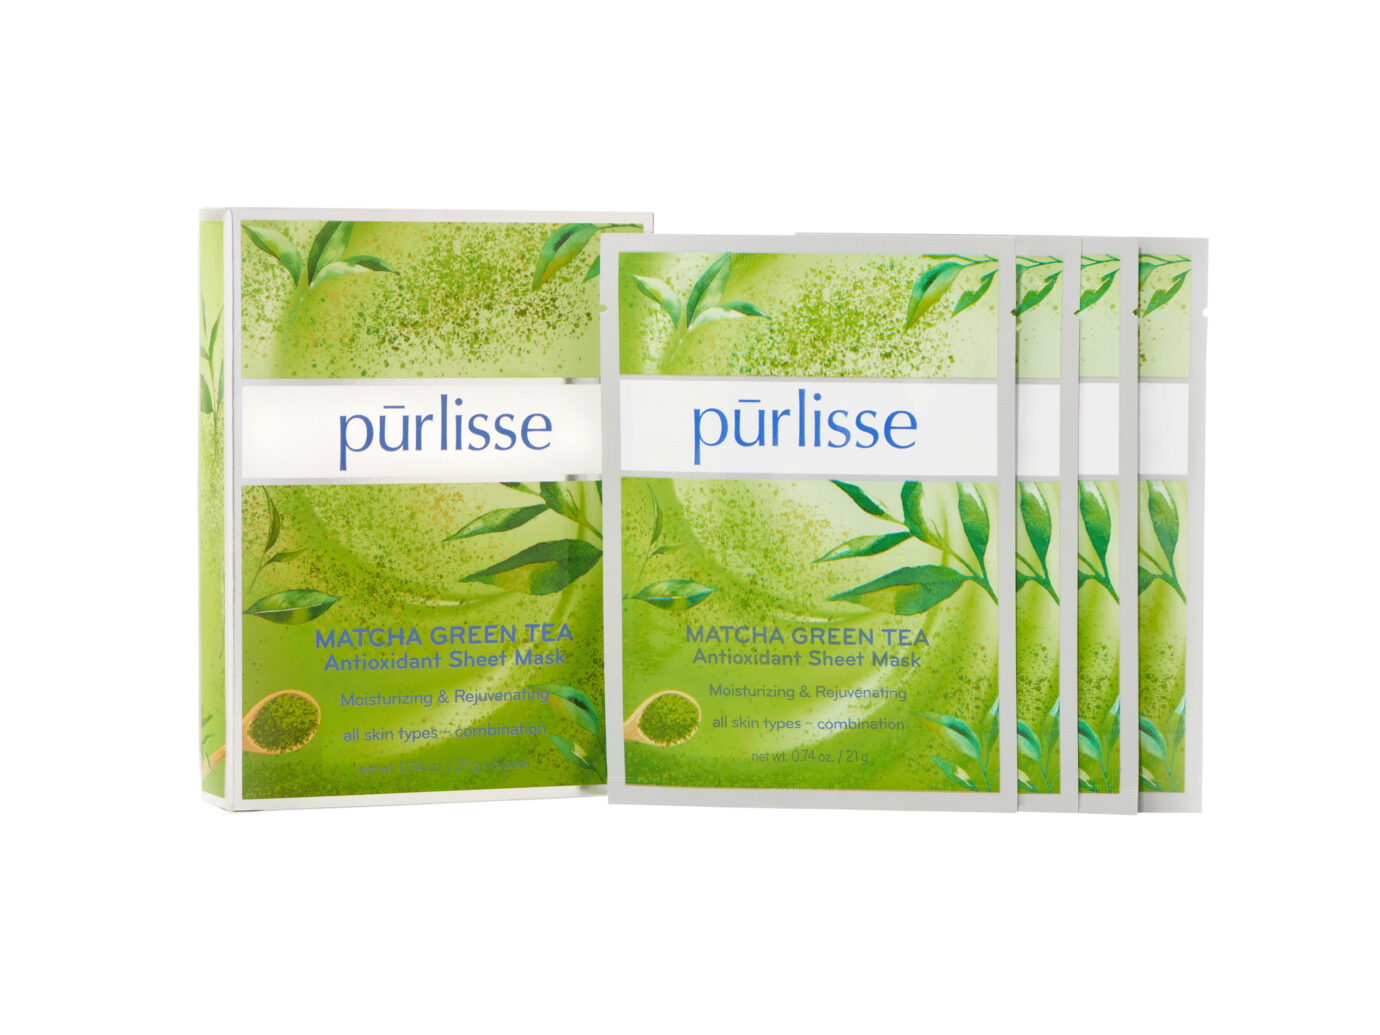 Purlisse Matcha Green Tea Antioxidant Sheet Masks